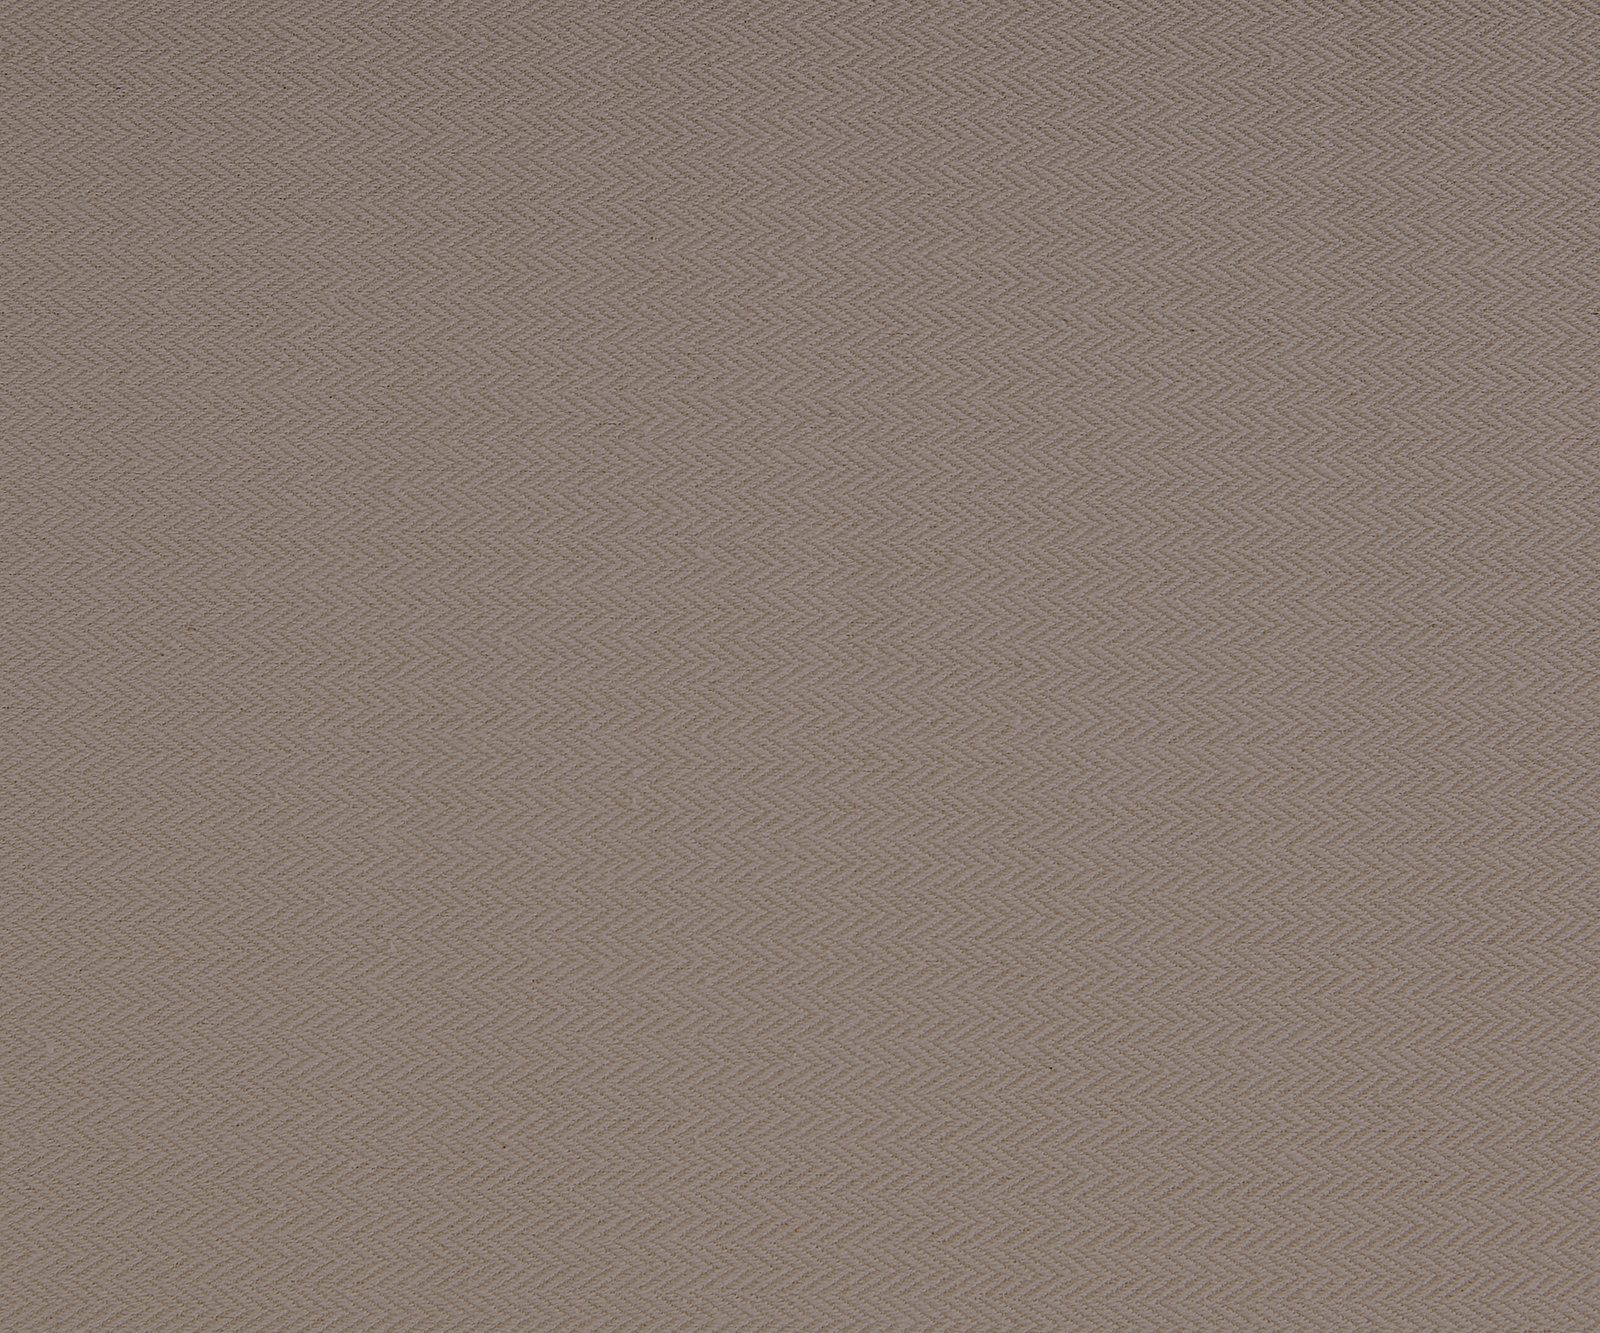 Braun DELIFE Grau cm Loungesessel / Nizza, mit Rattan Kissen braun 103x95 Gartensessel grau aus